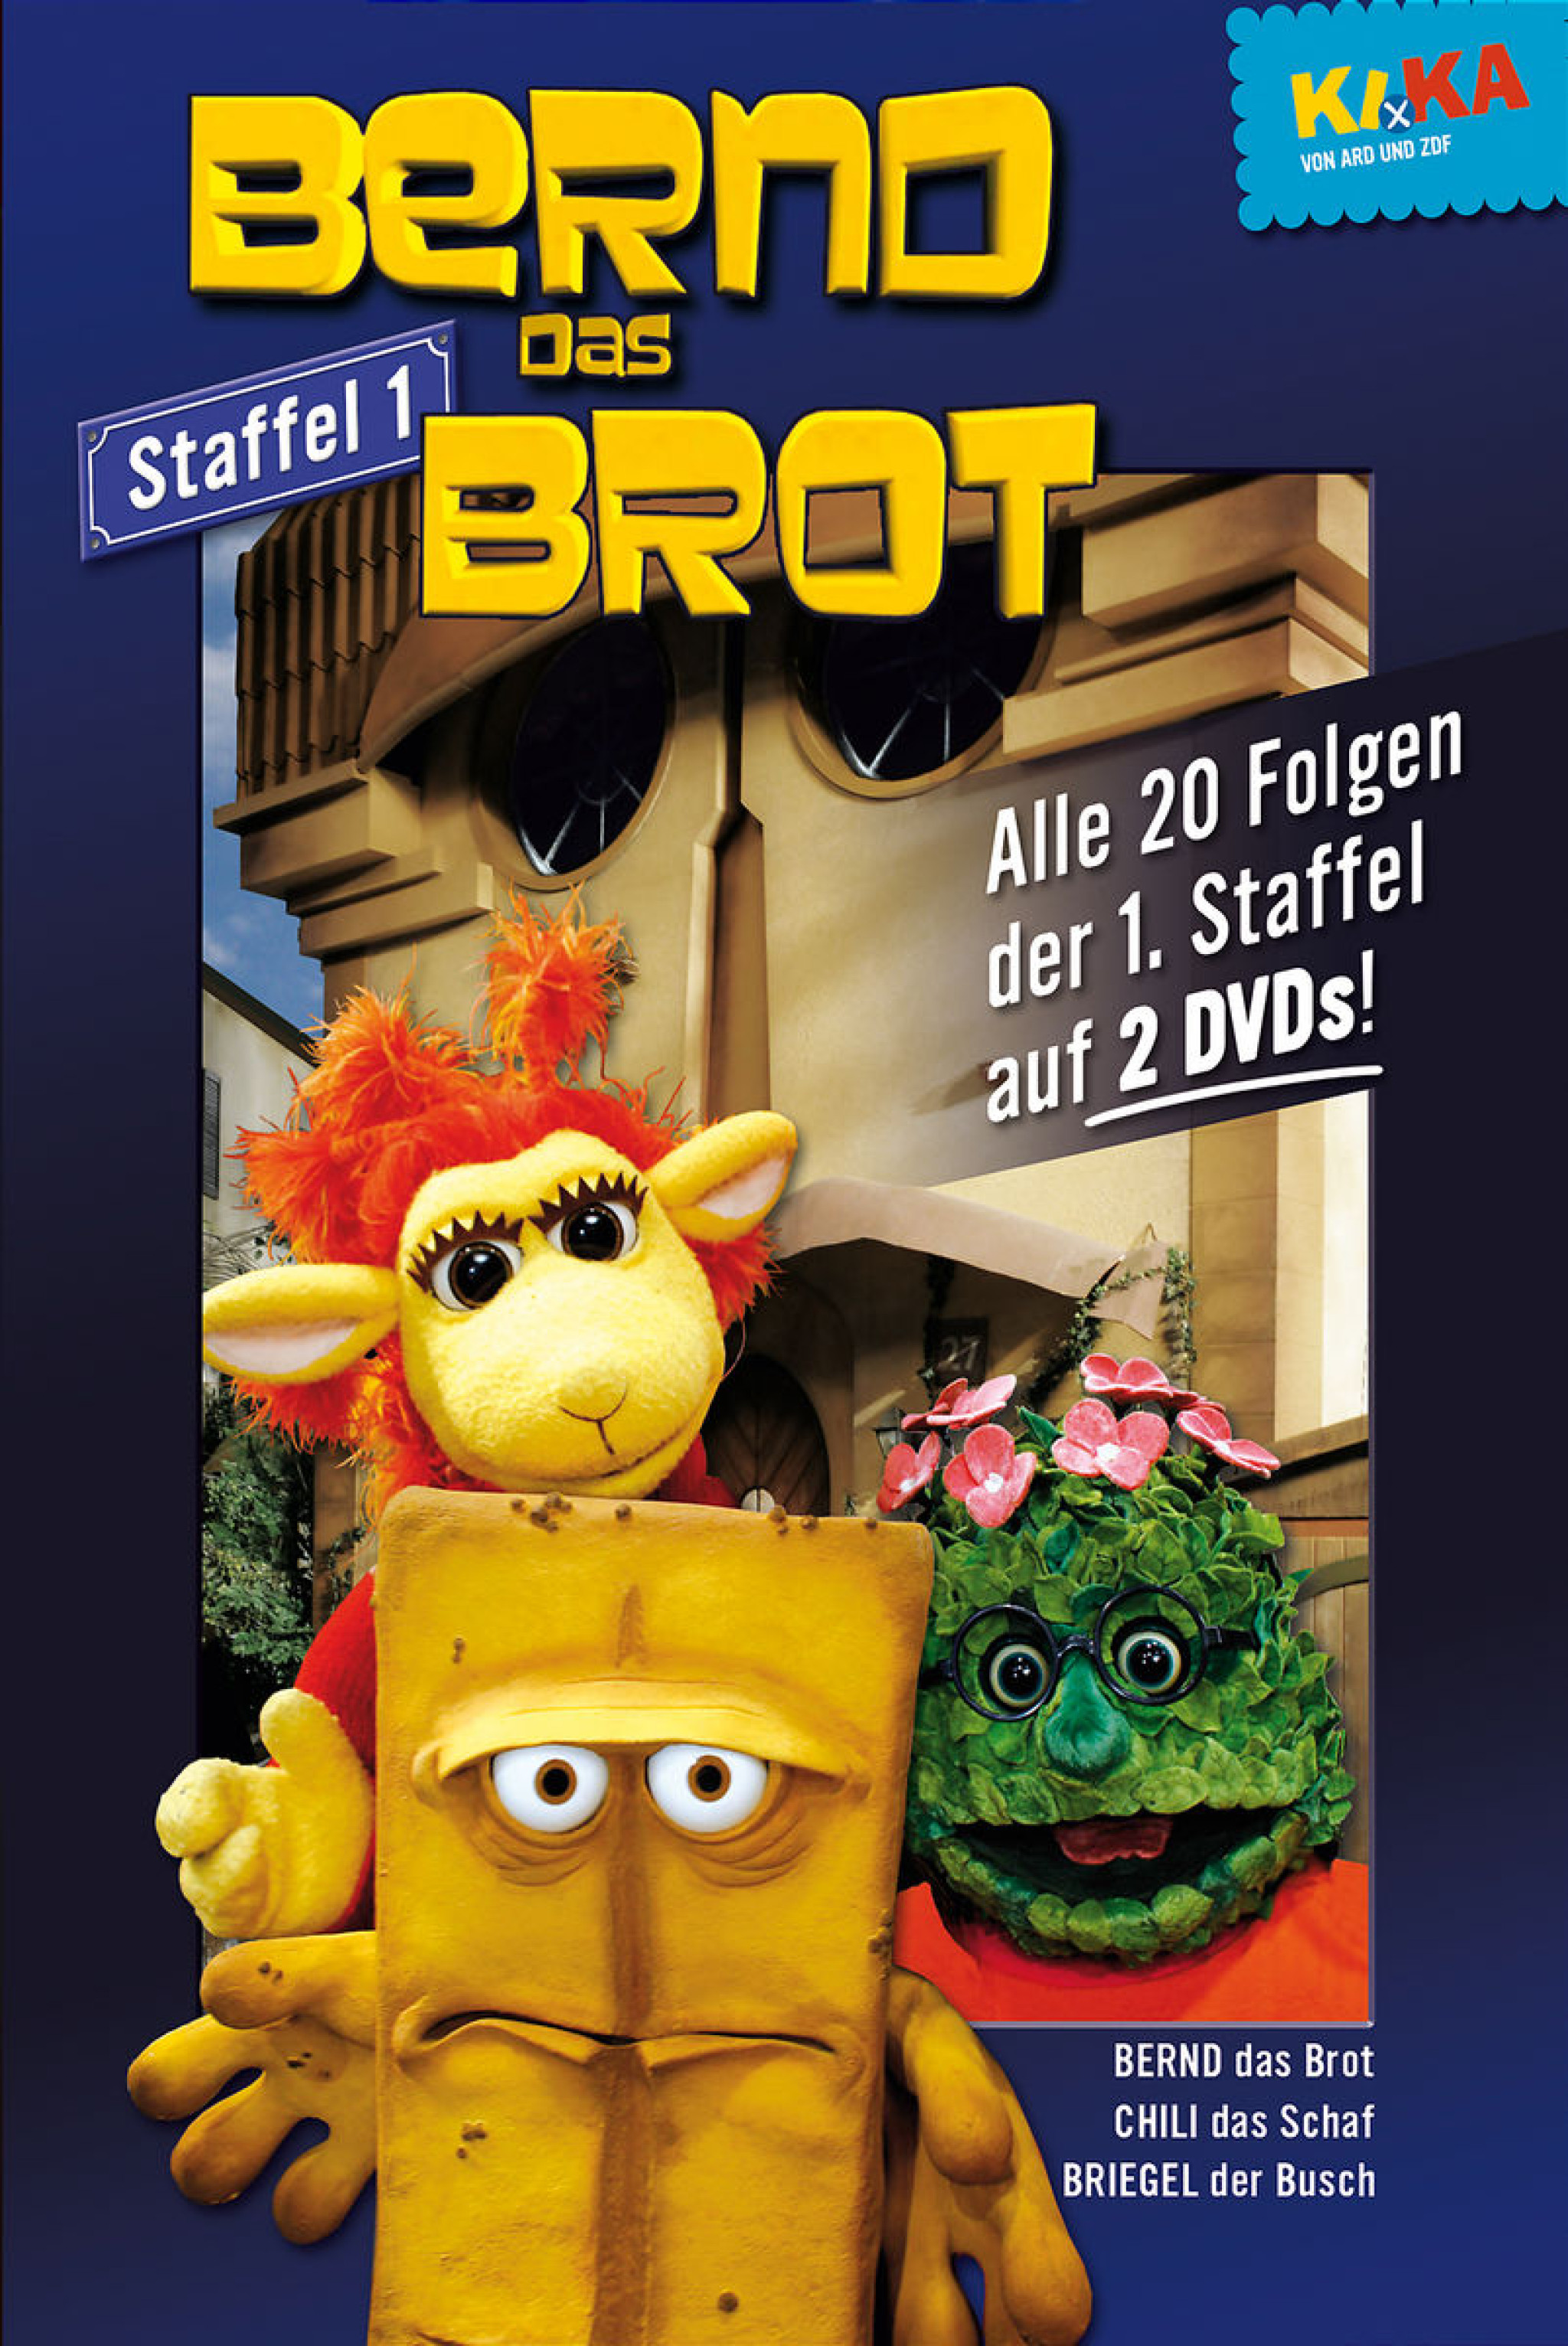 Bernd das Brot - Die Serie (Staffel 1) 0602517736834